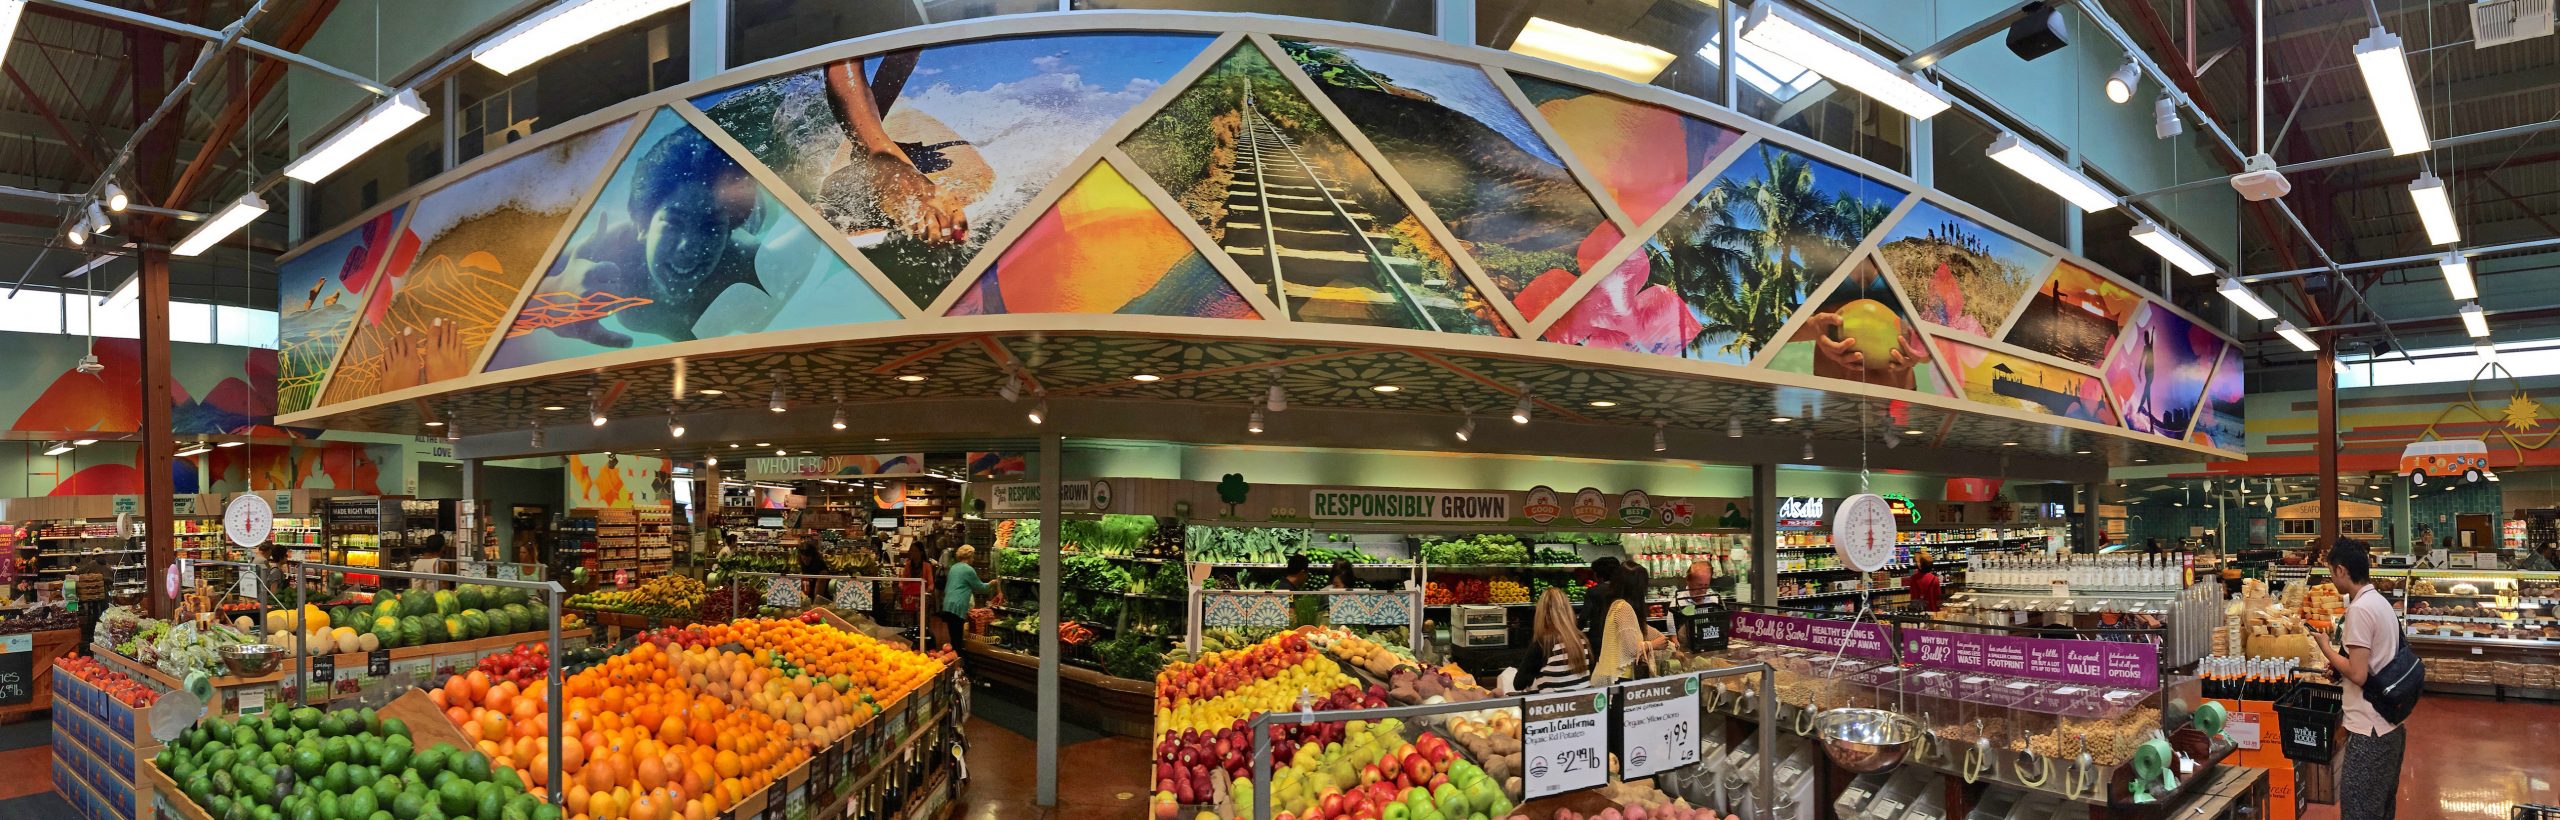 Whole Foods Market - Kahala Mall